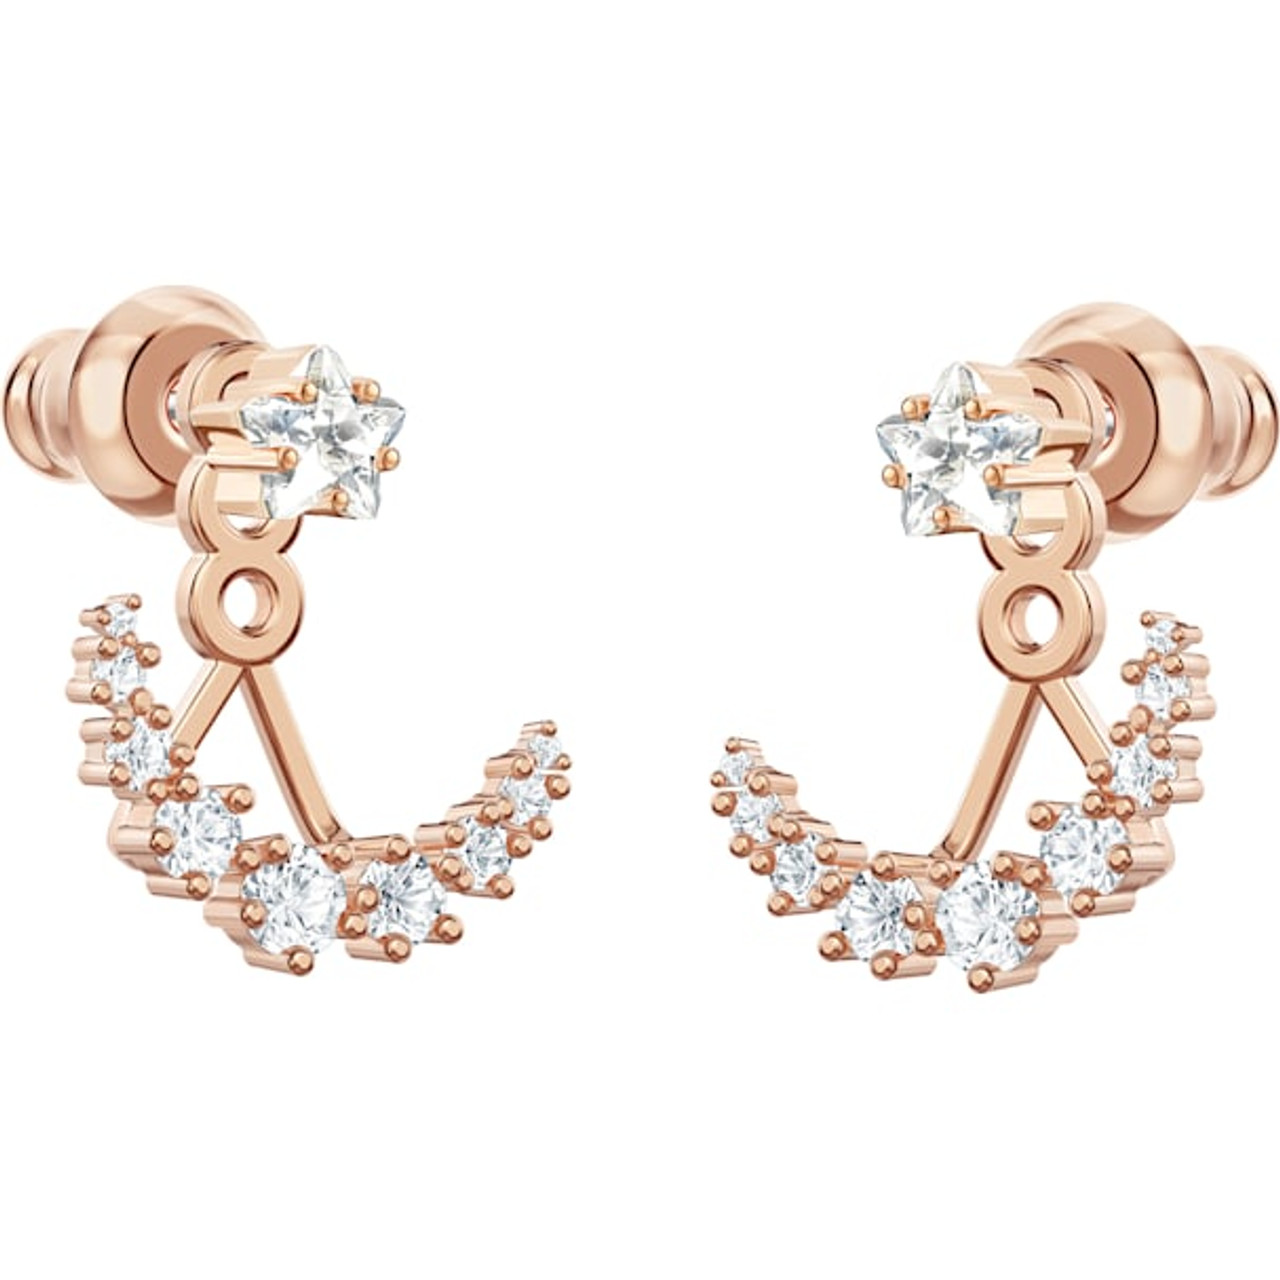 Swarovski Crystal Penélope Cruz Moonsun Earring Jackets, Rose-Gold Tone  5486351